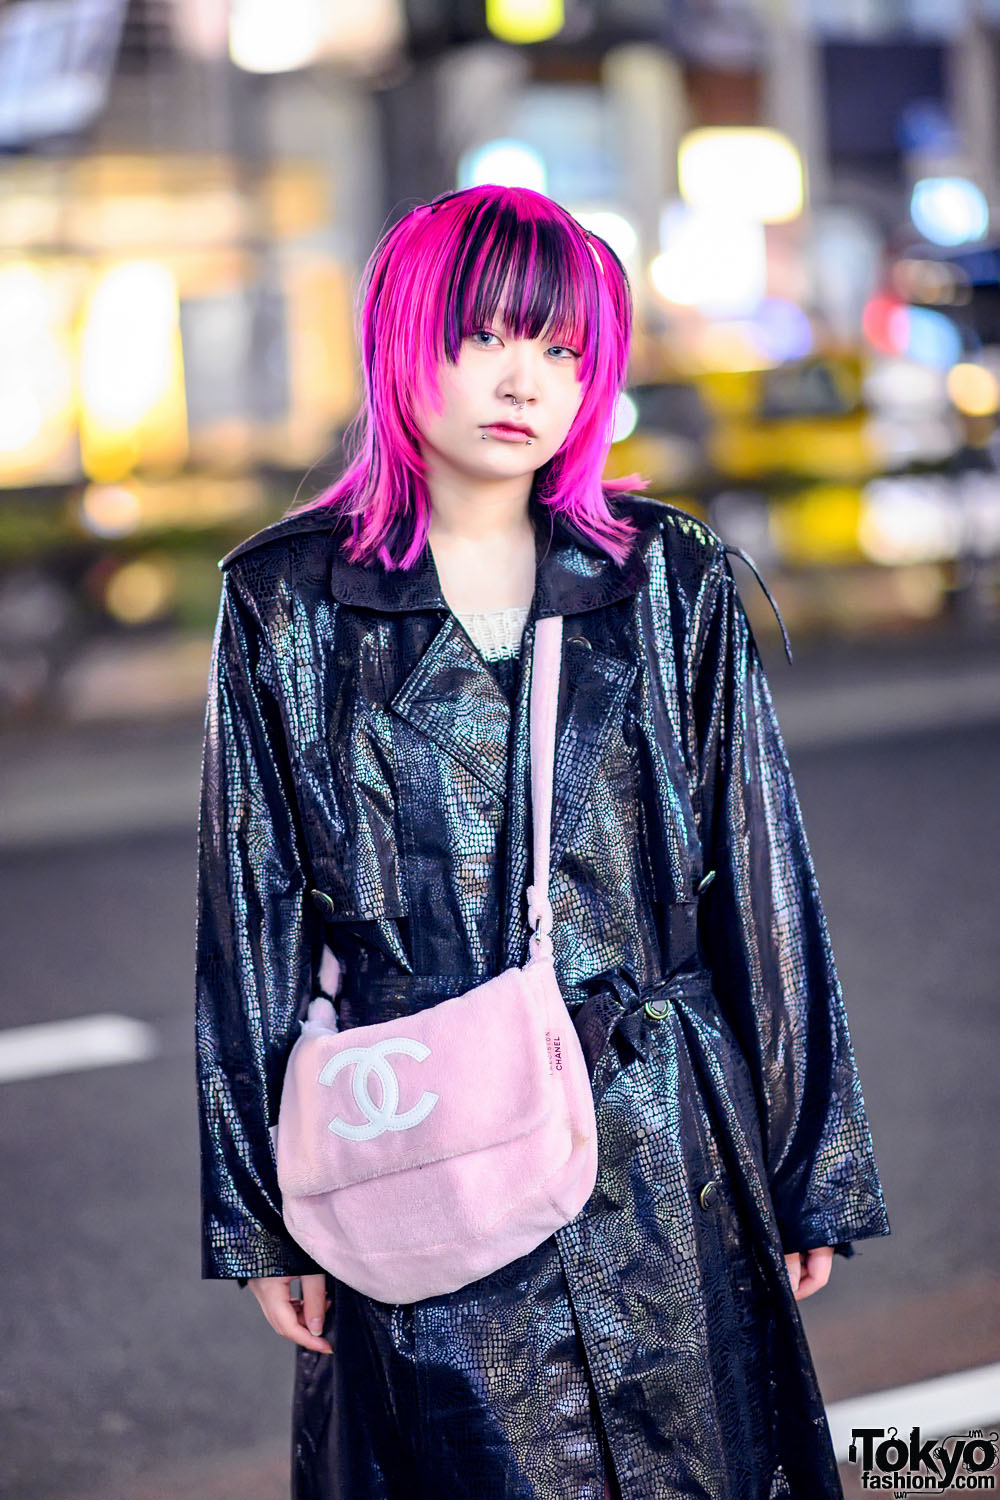 Harajuku Girl w/ Pink Streaked Hairstyle, Chanel Plush Bag, Leg Warmers ...